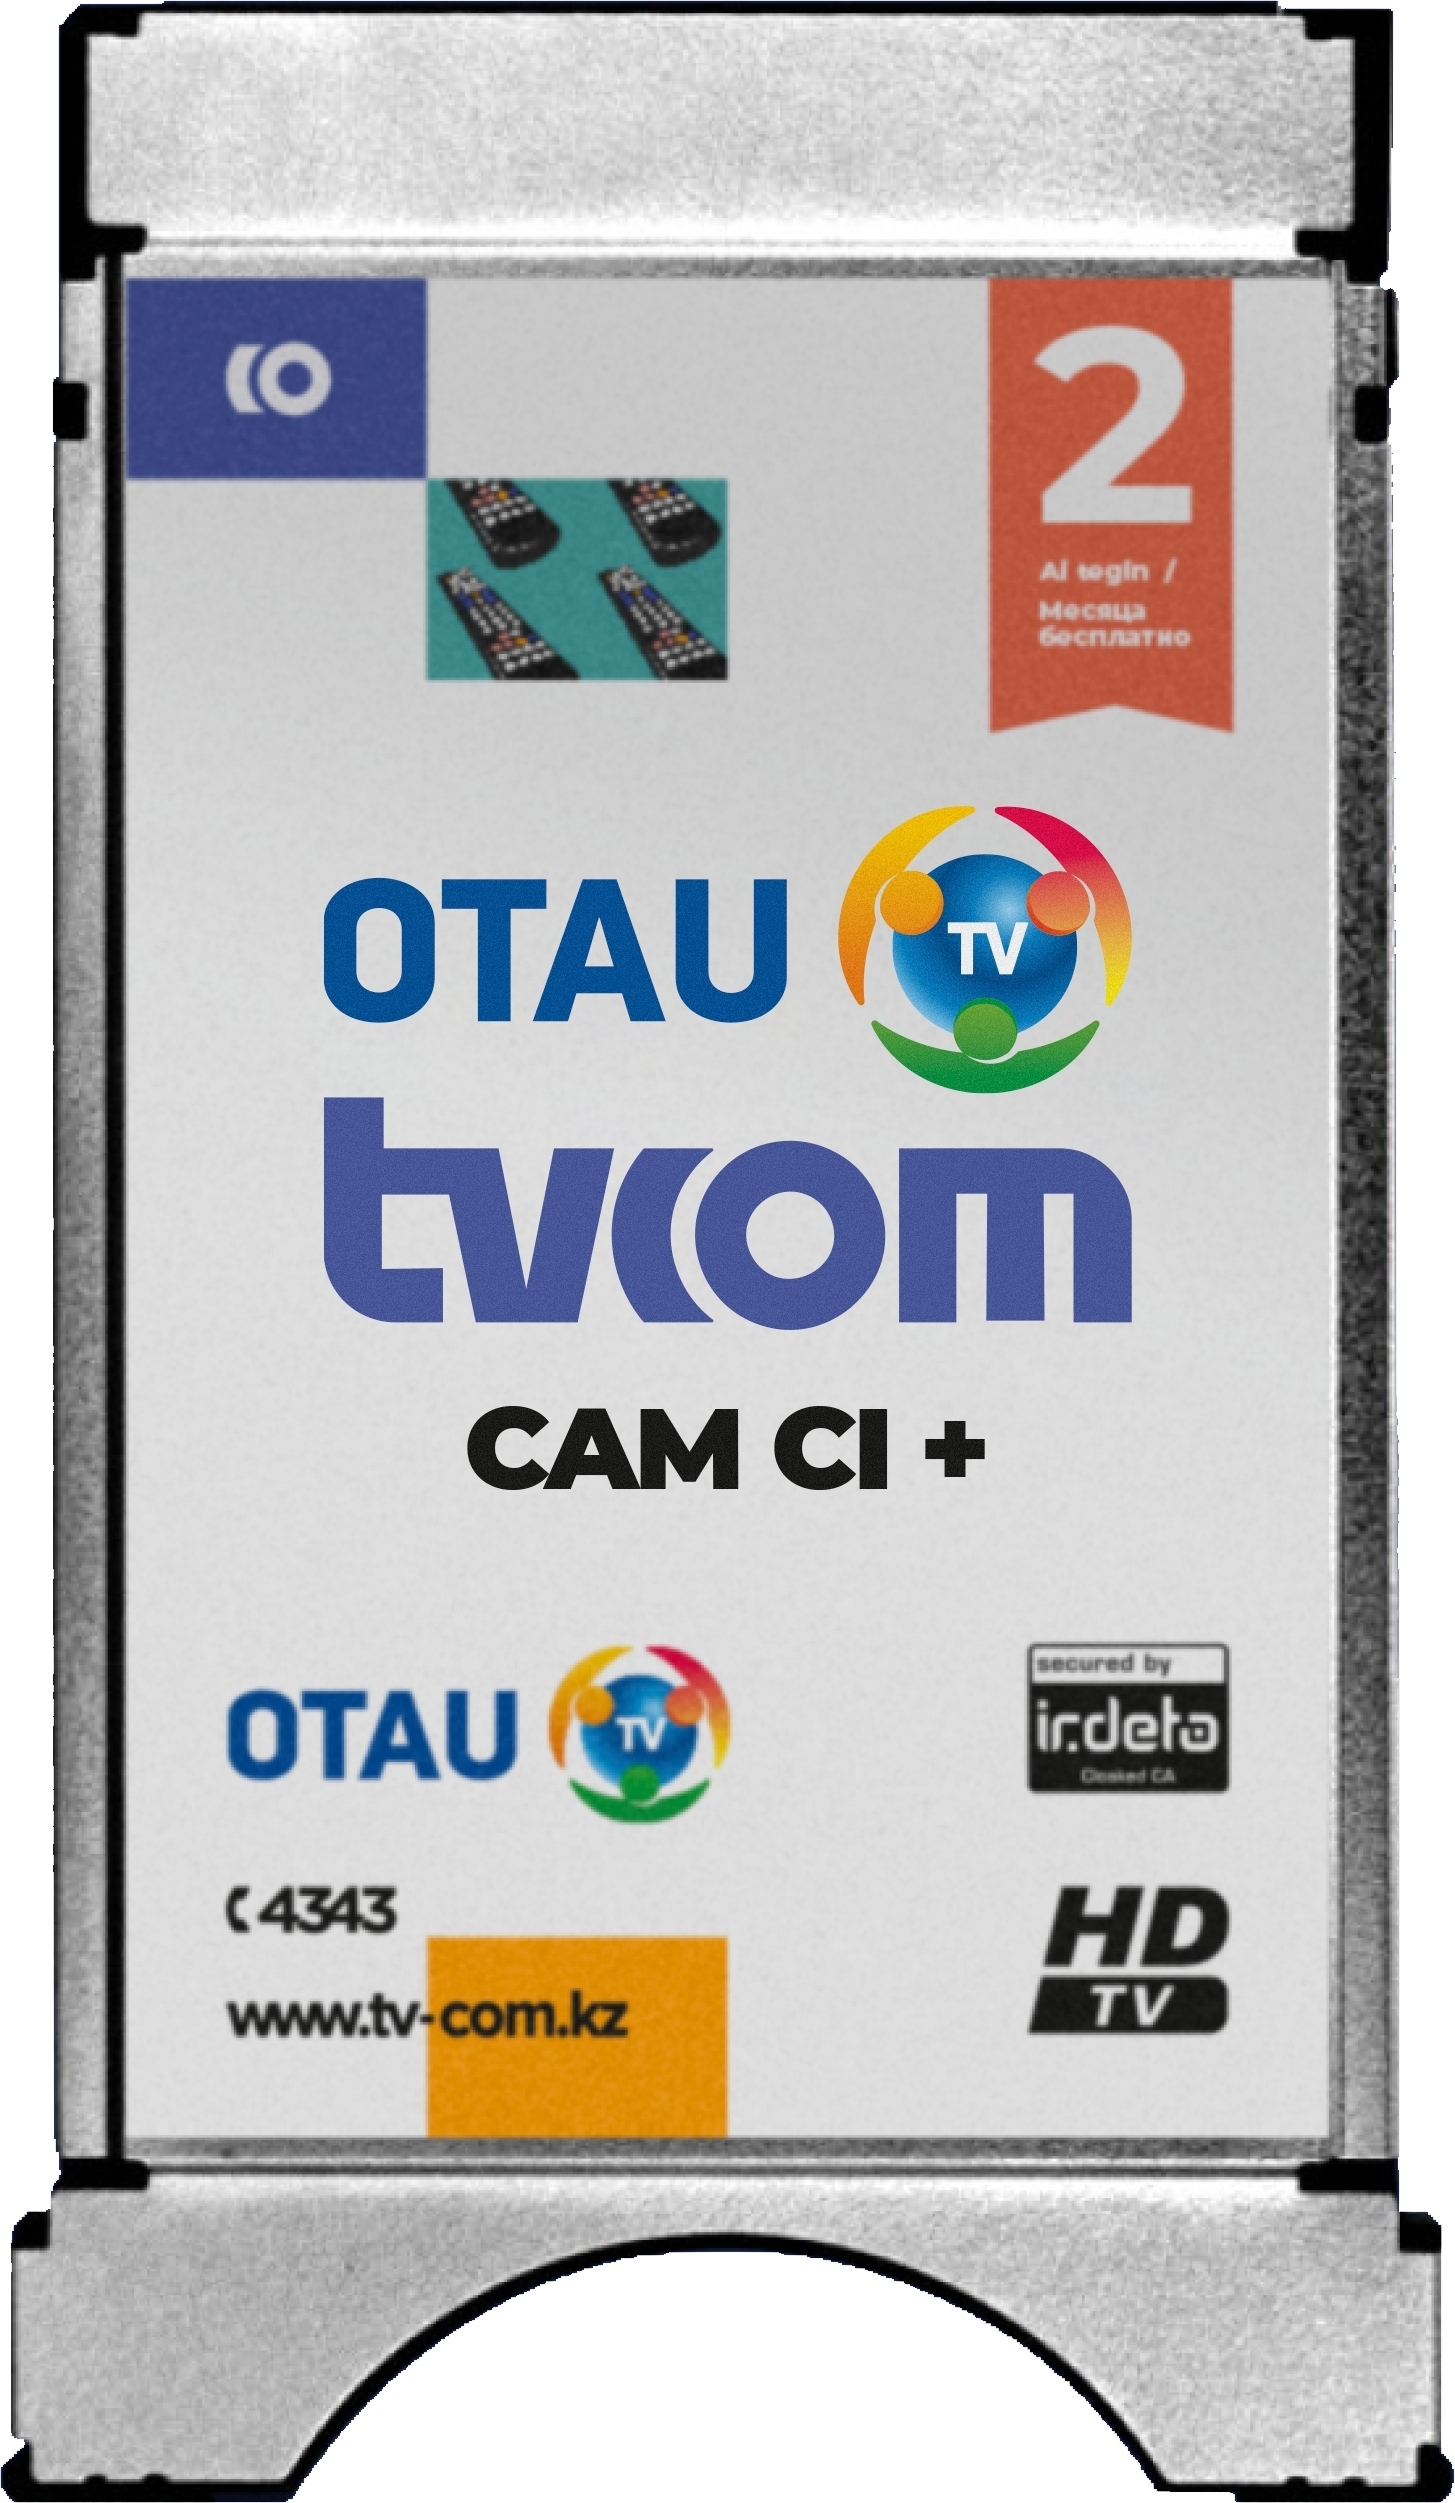 Otau tv. Отау ТВ Кам модуль. Cam модуль для телевизора. Cam модуль для тарелки.